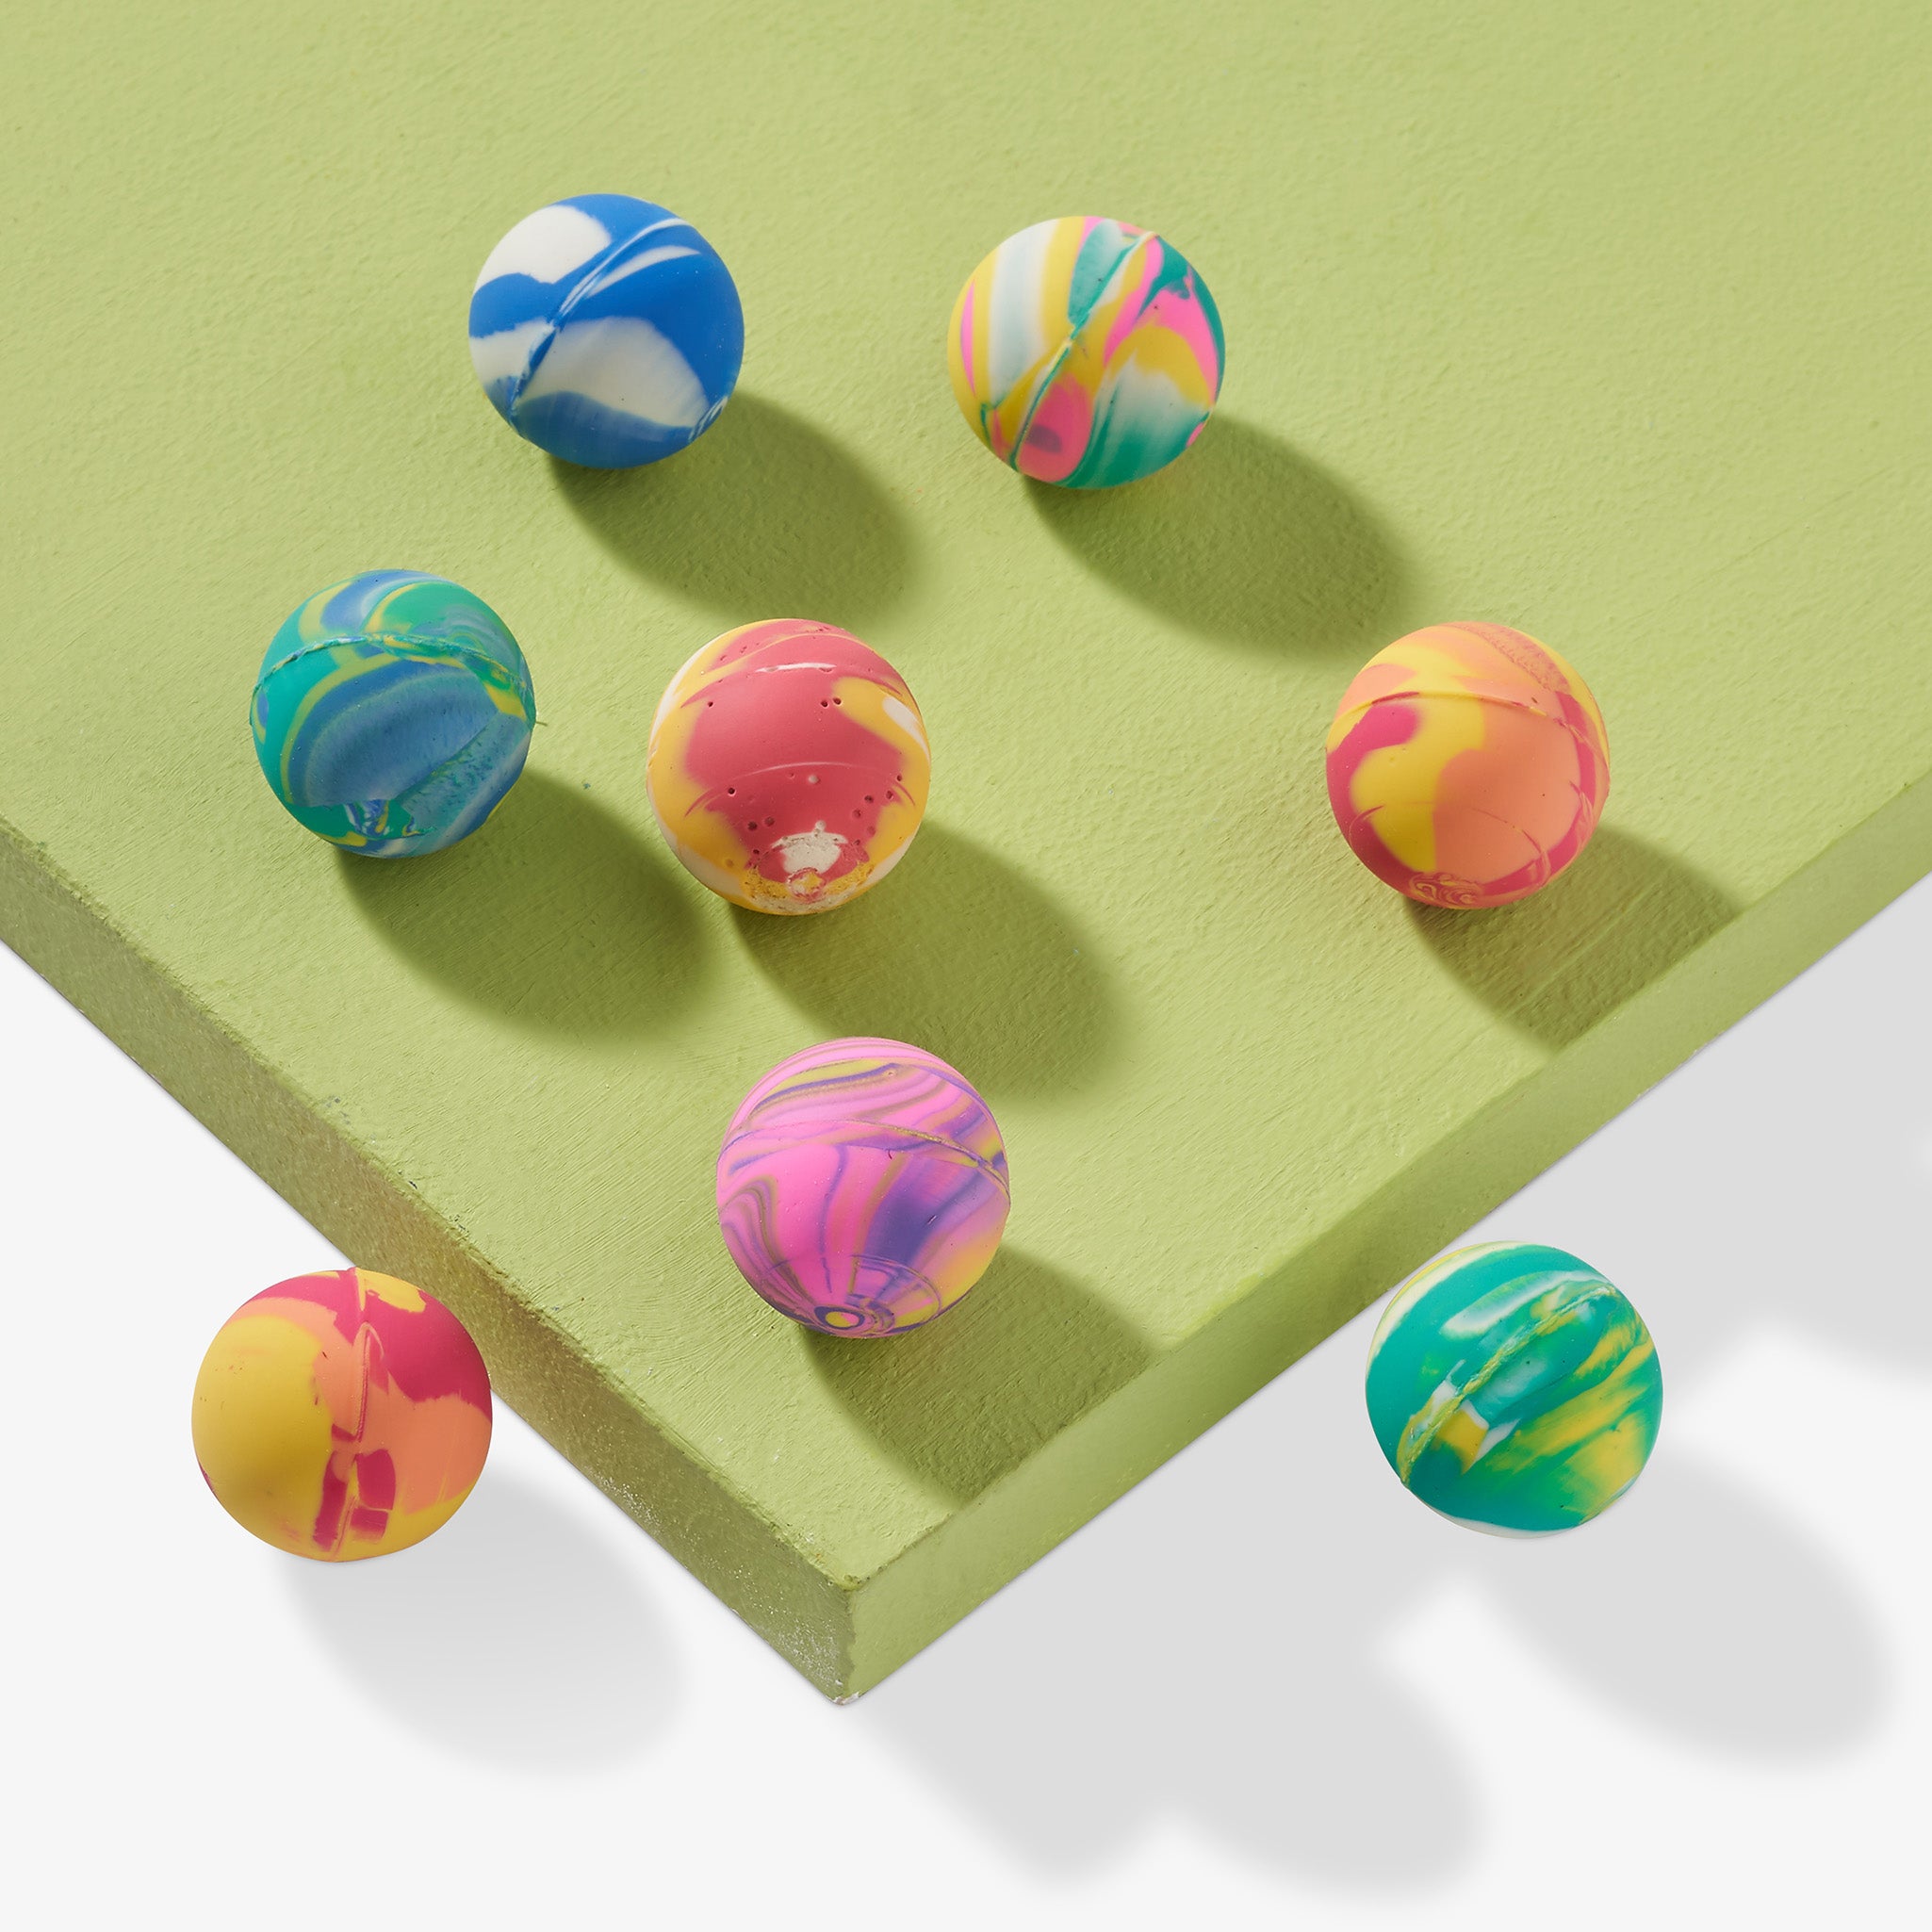 90 Marble Effect Bouncy Balls